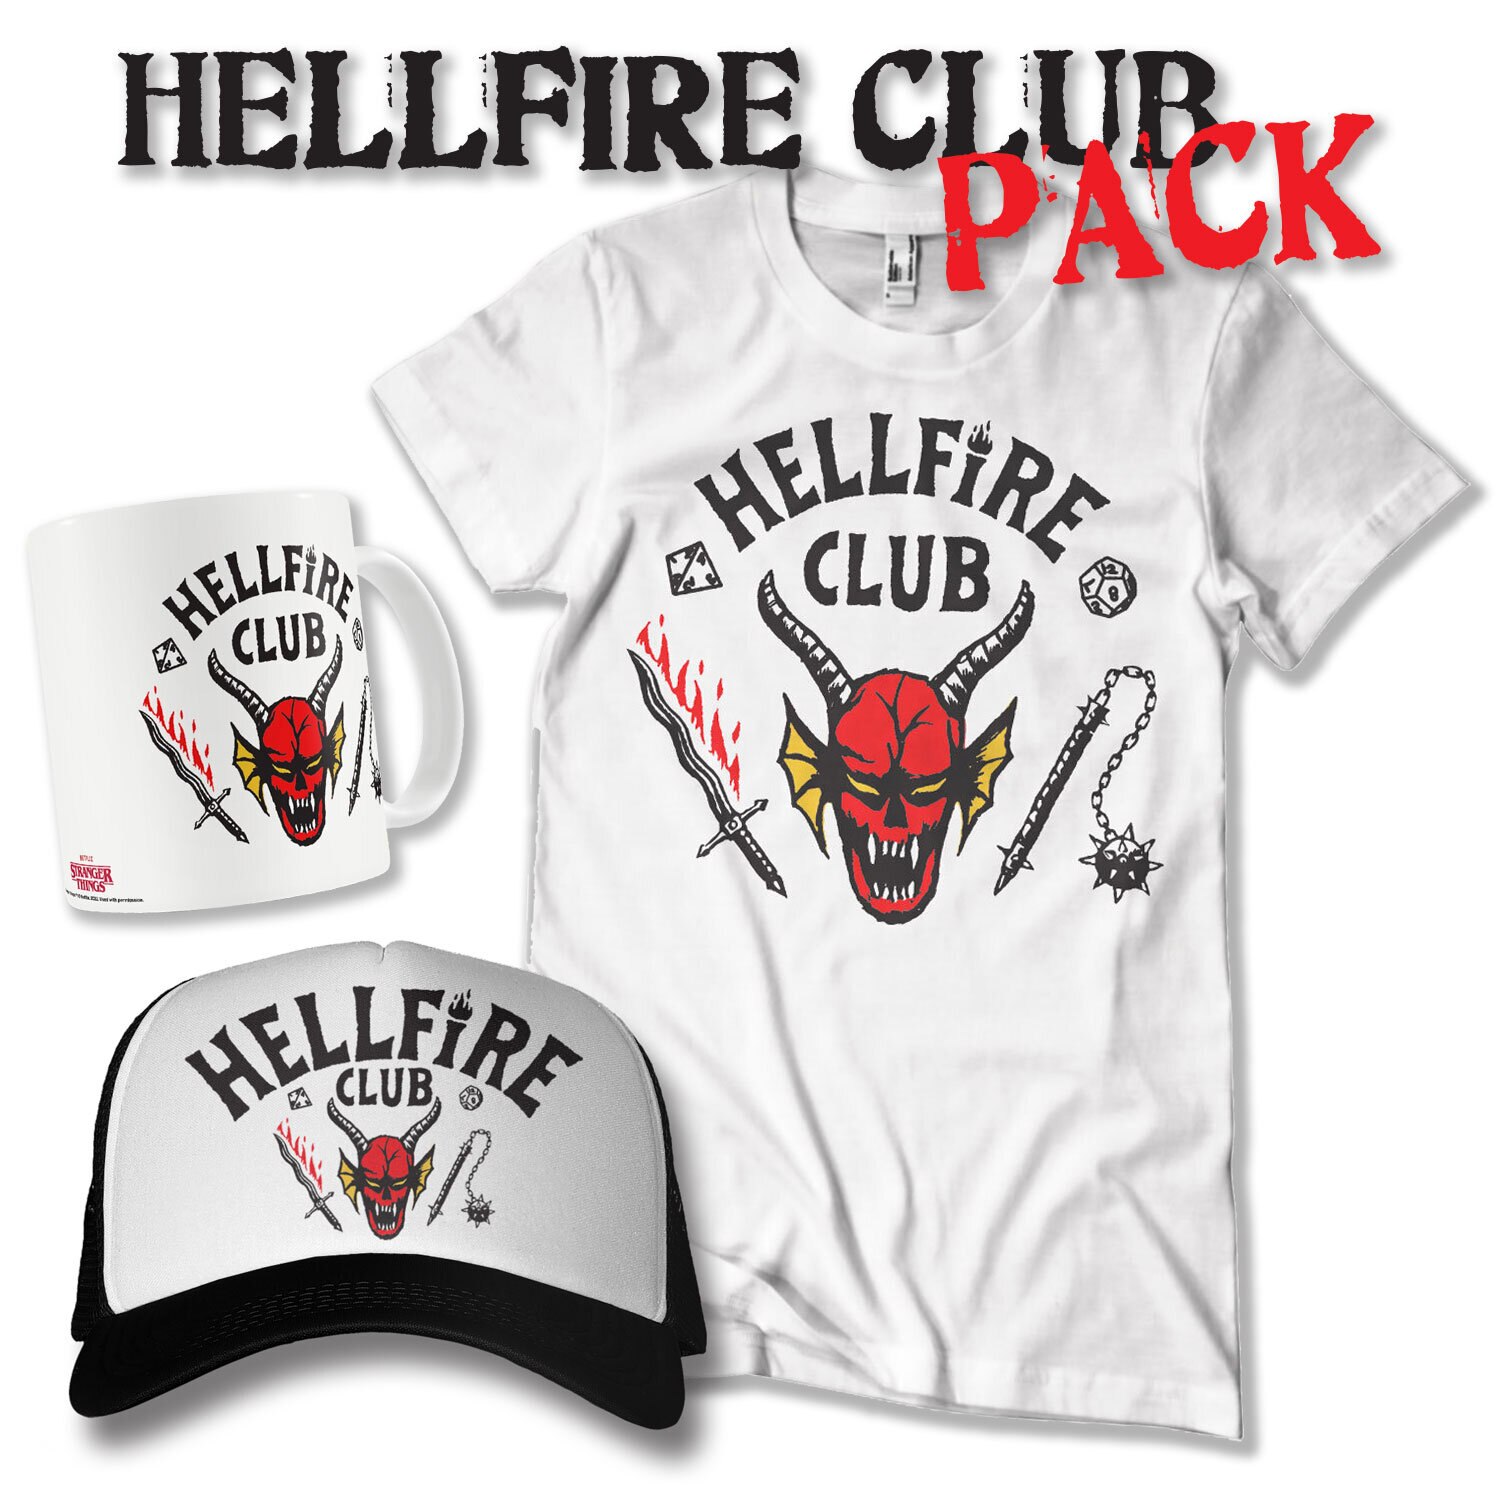 Hellfire Club Pack